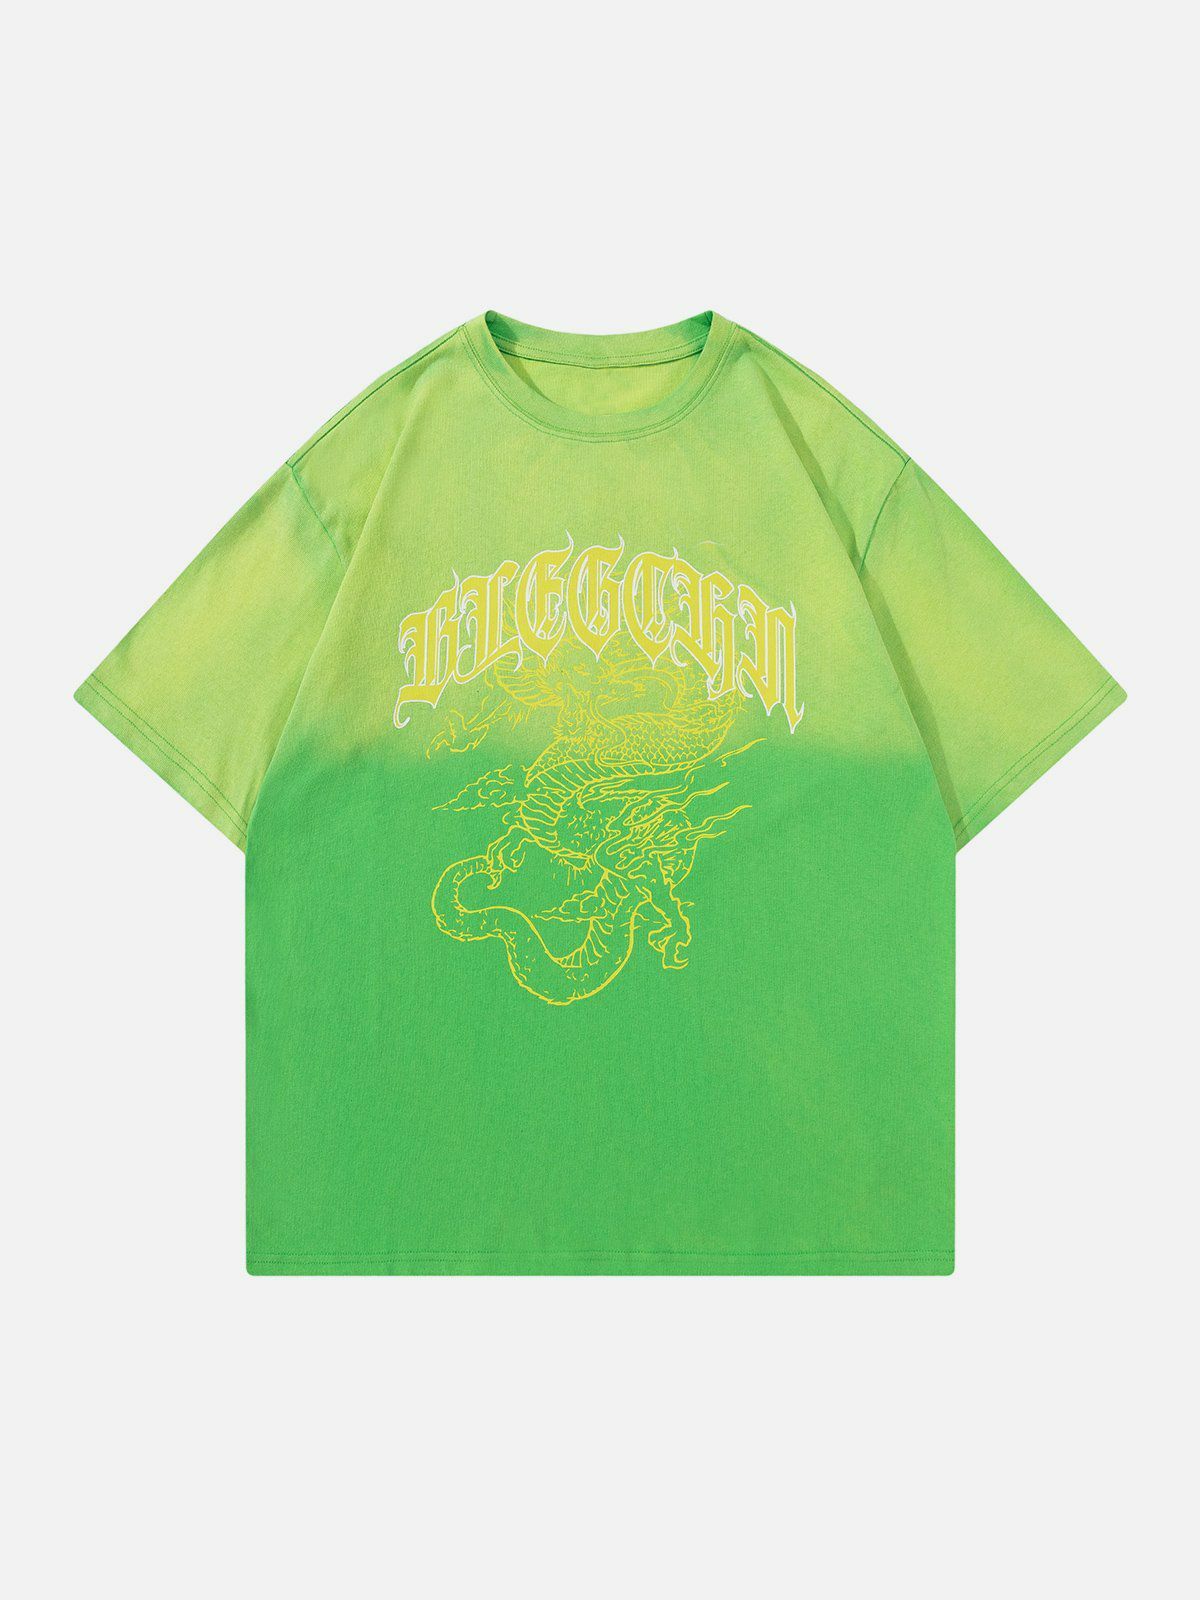 vibrant dragon print tee edgy streetwear shirt 1085